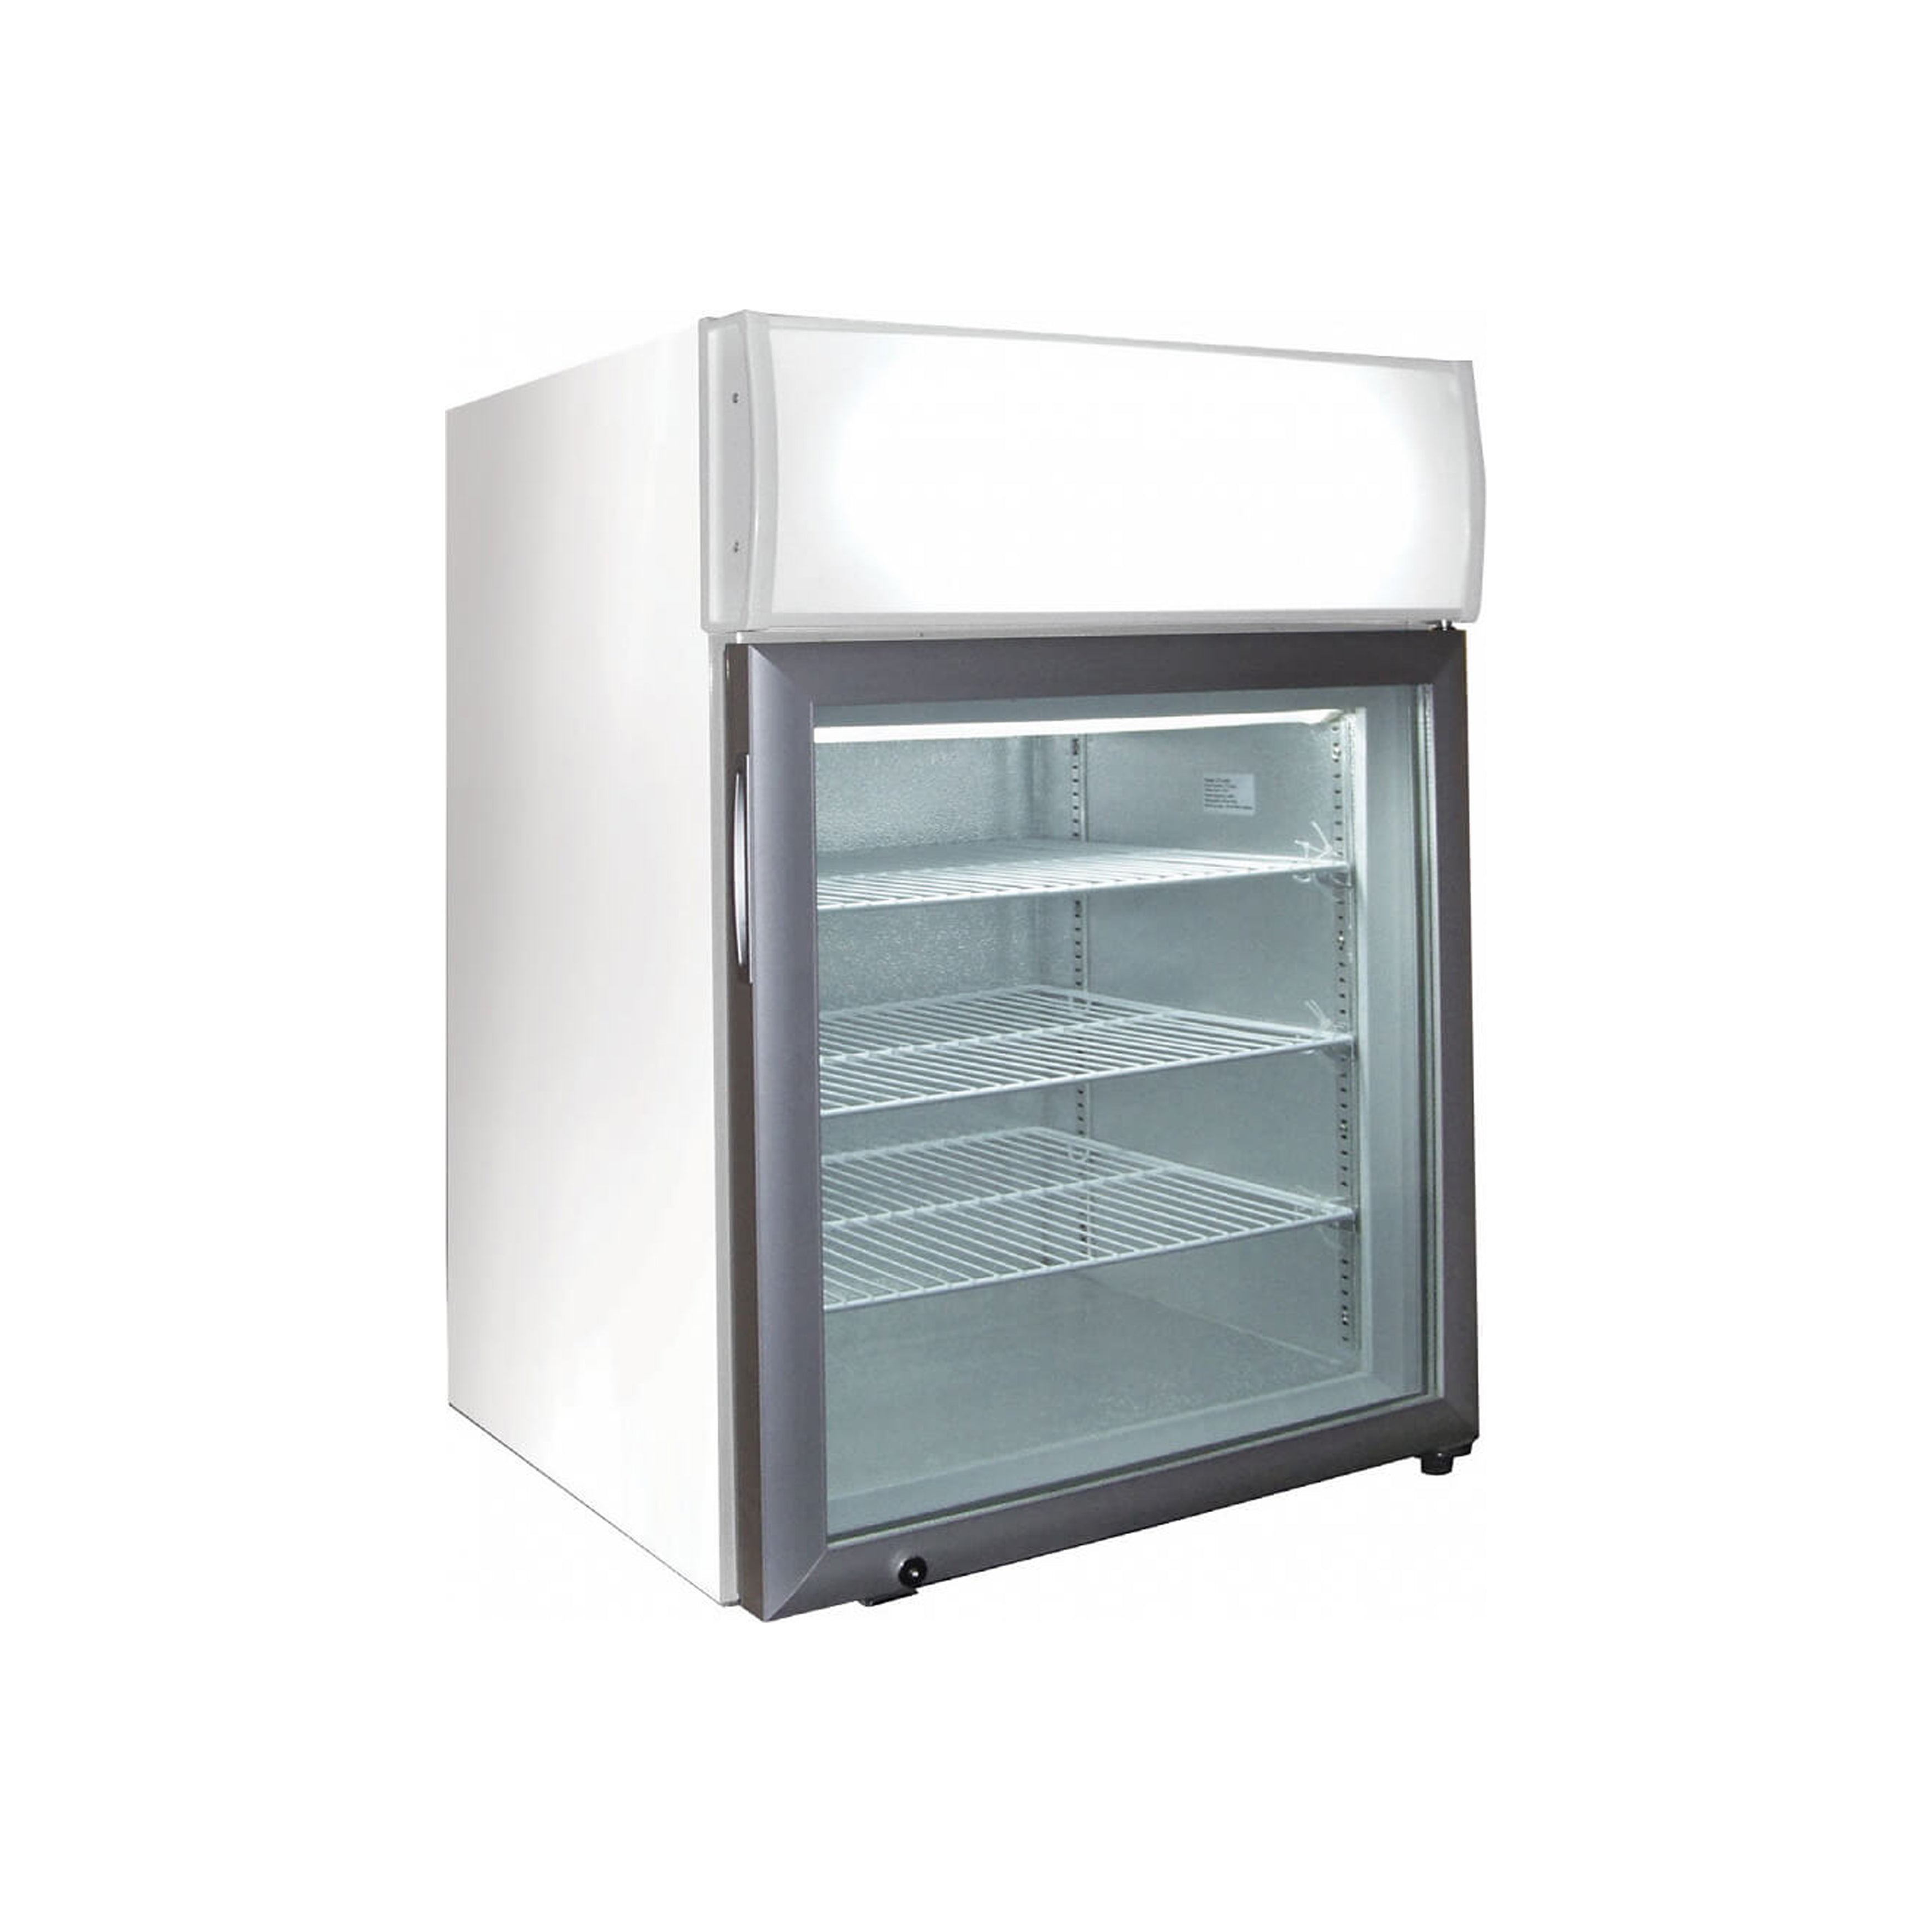 Excellence Industries - CTF-2HCMS, 22.63" Commercial Countertop Merchandiser Freezer 1.9 cu.ft.